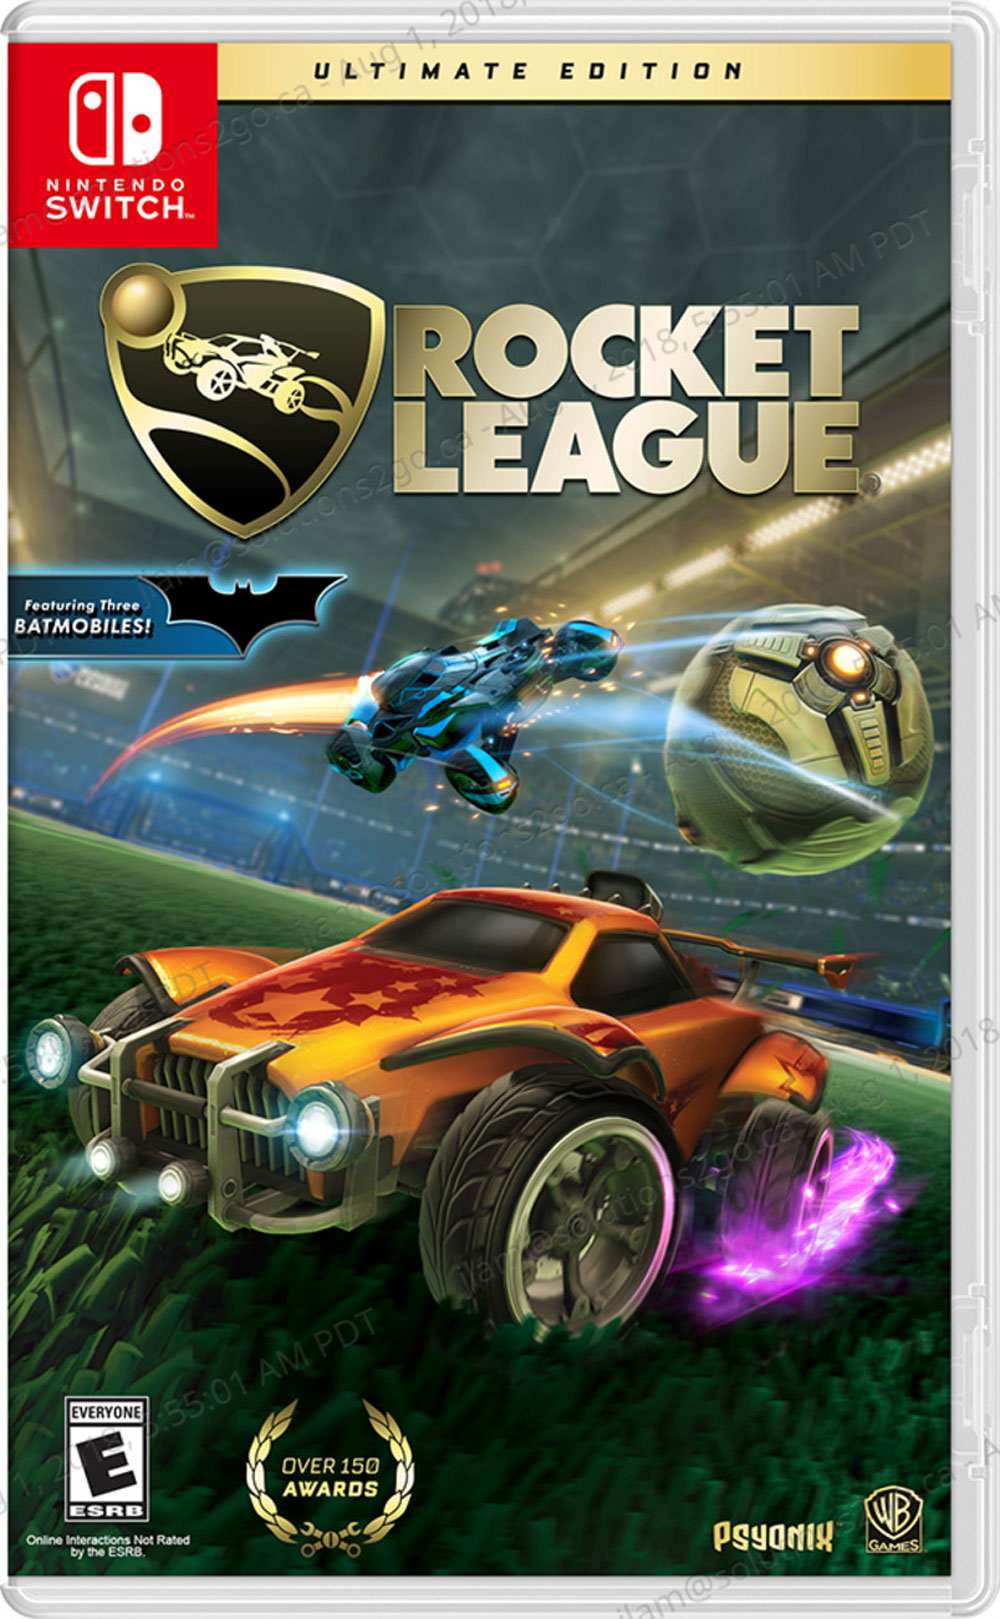 does rocket league need nintendo online